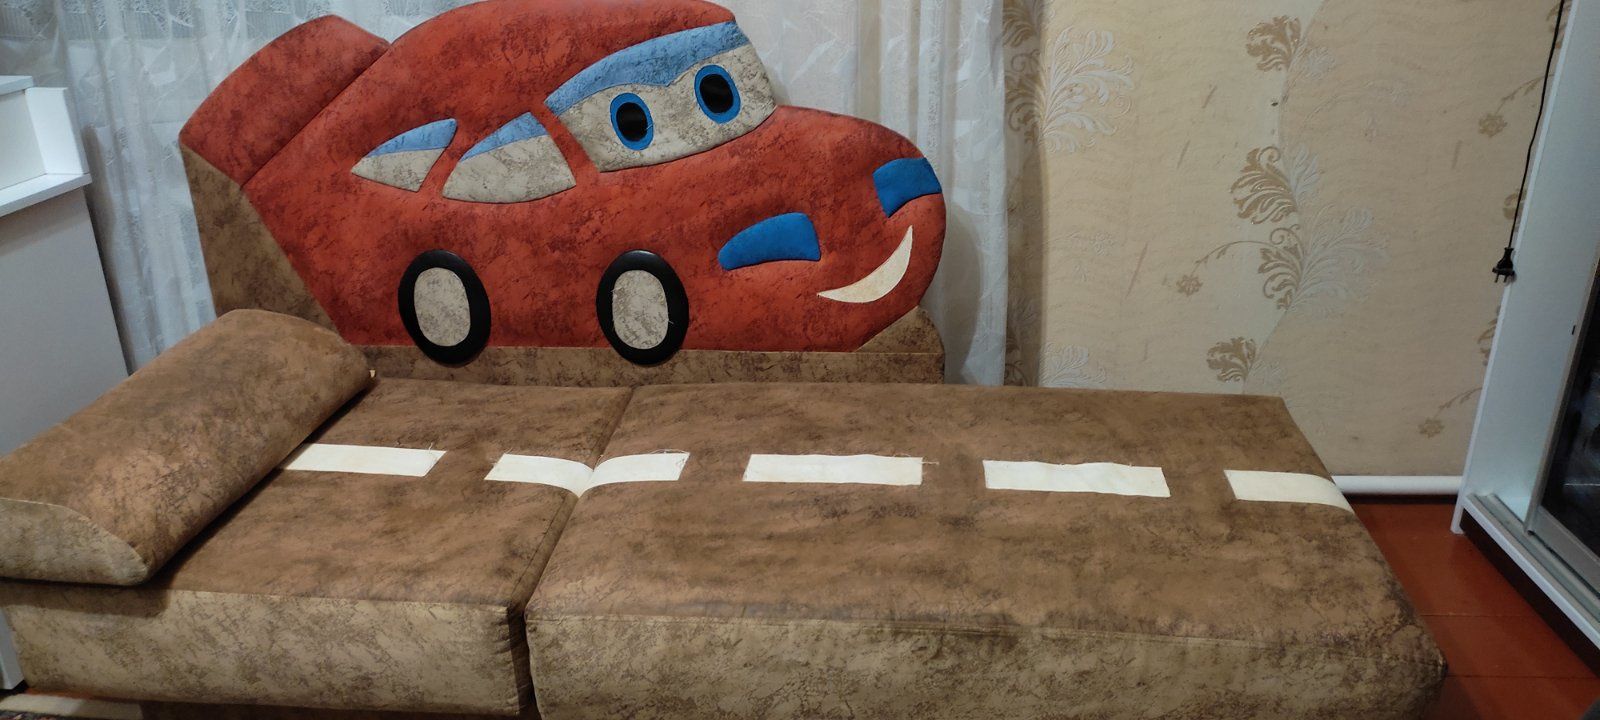 Продам дитячий диван